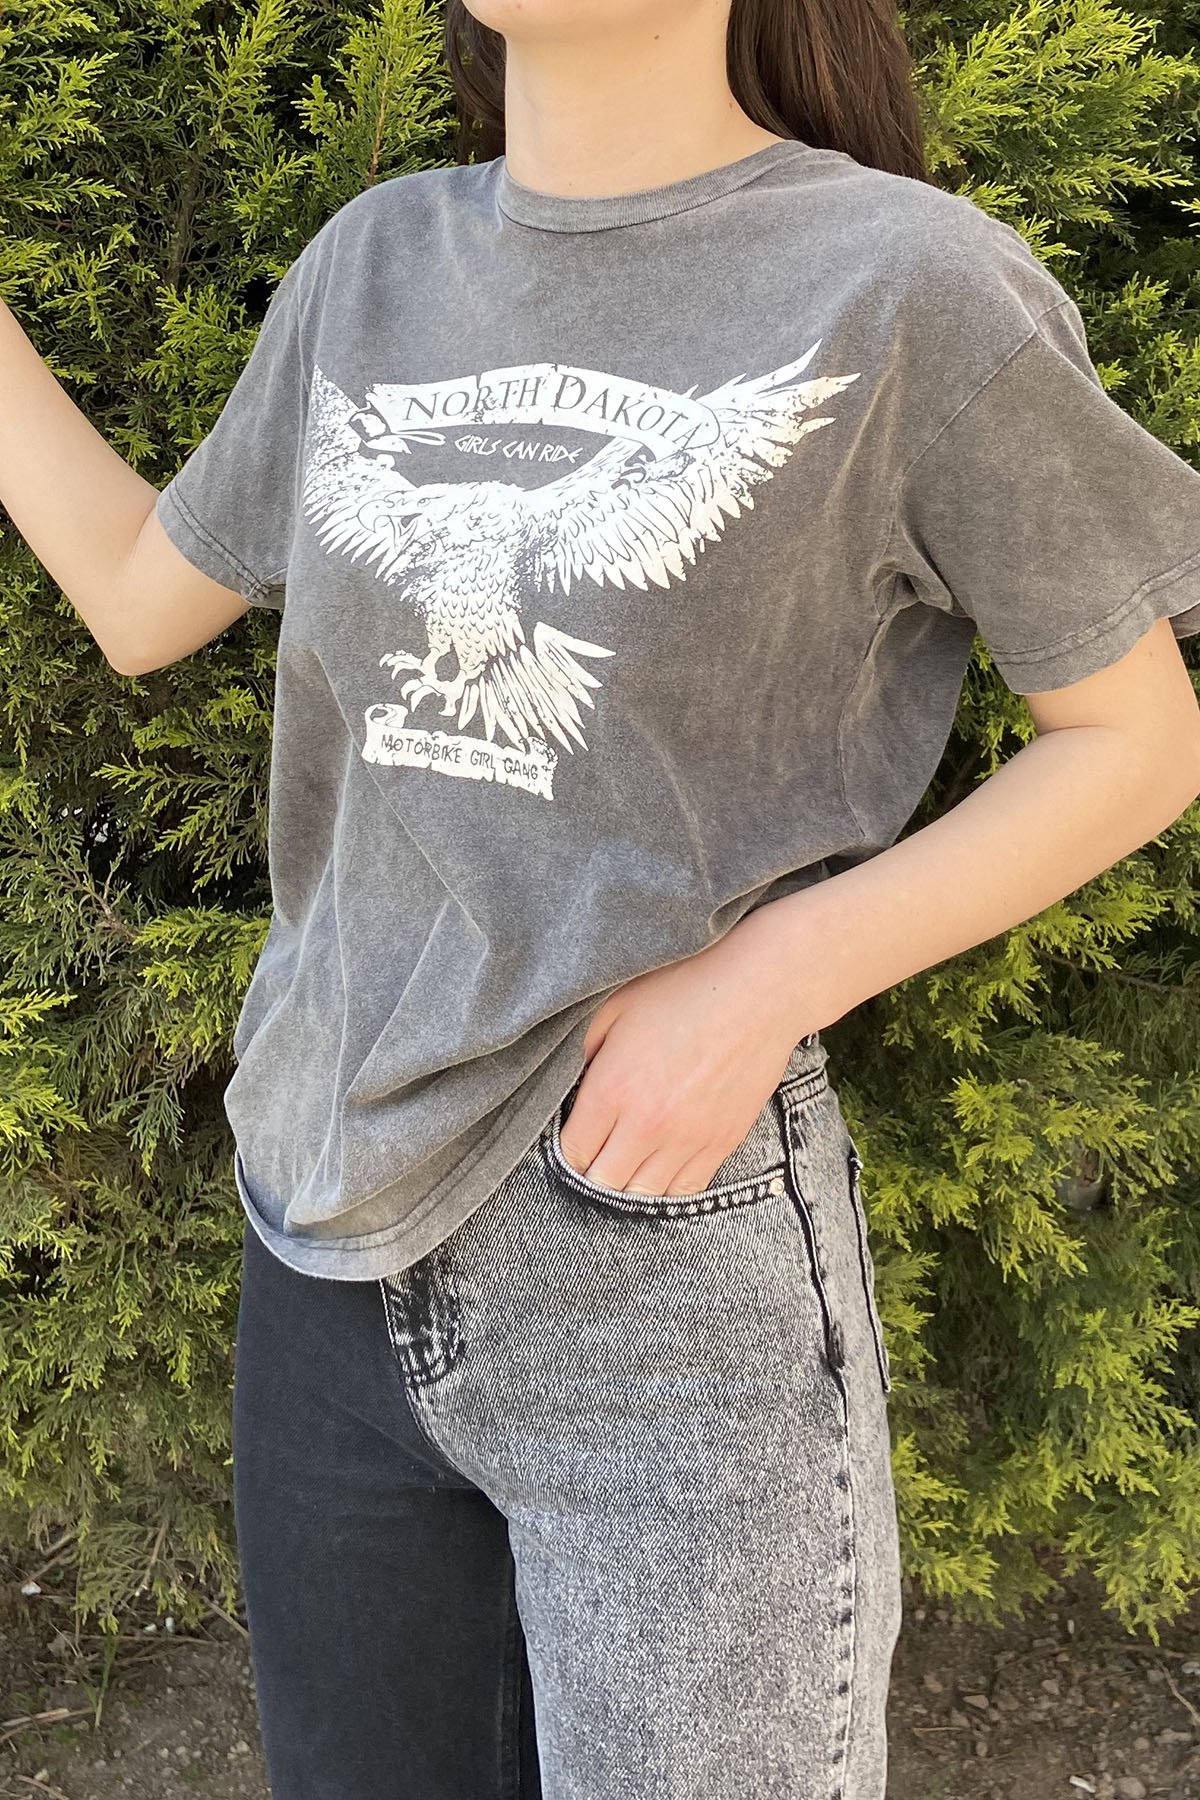 100 V005 Bis Yaka North Dakota Yazılı Yıkama Kumaş Tshirt 